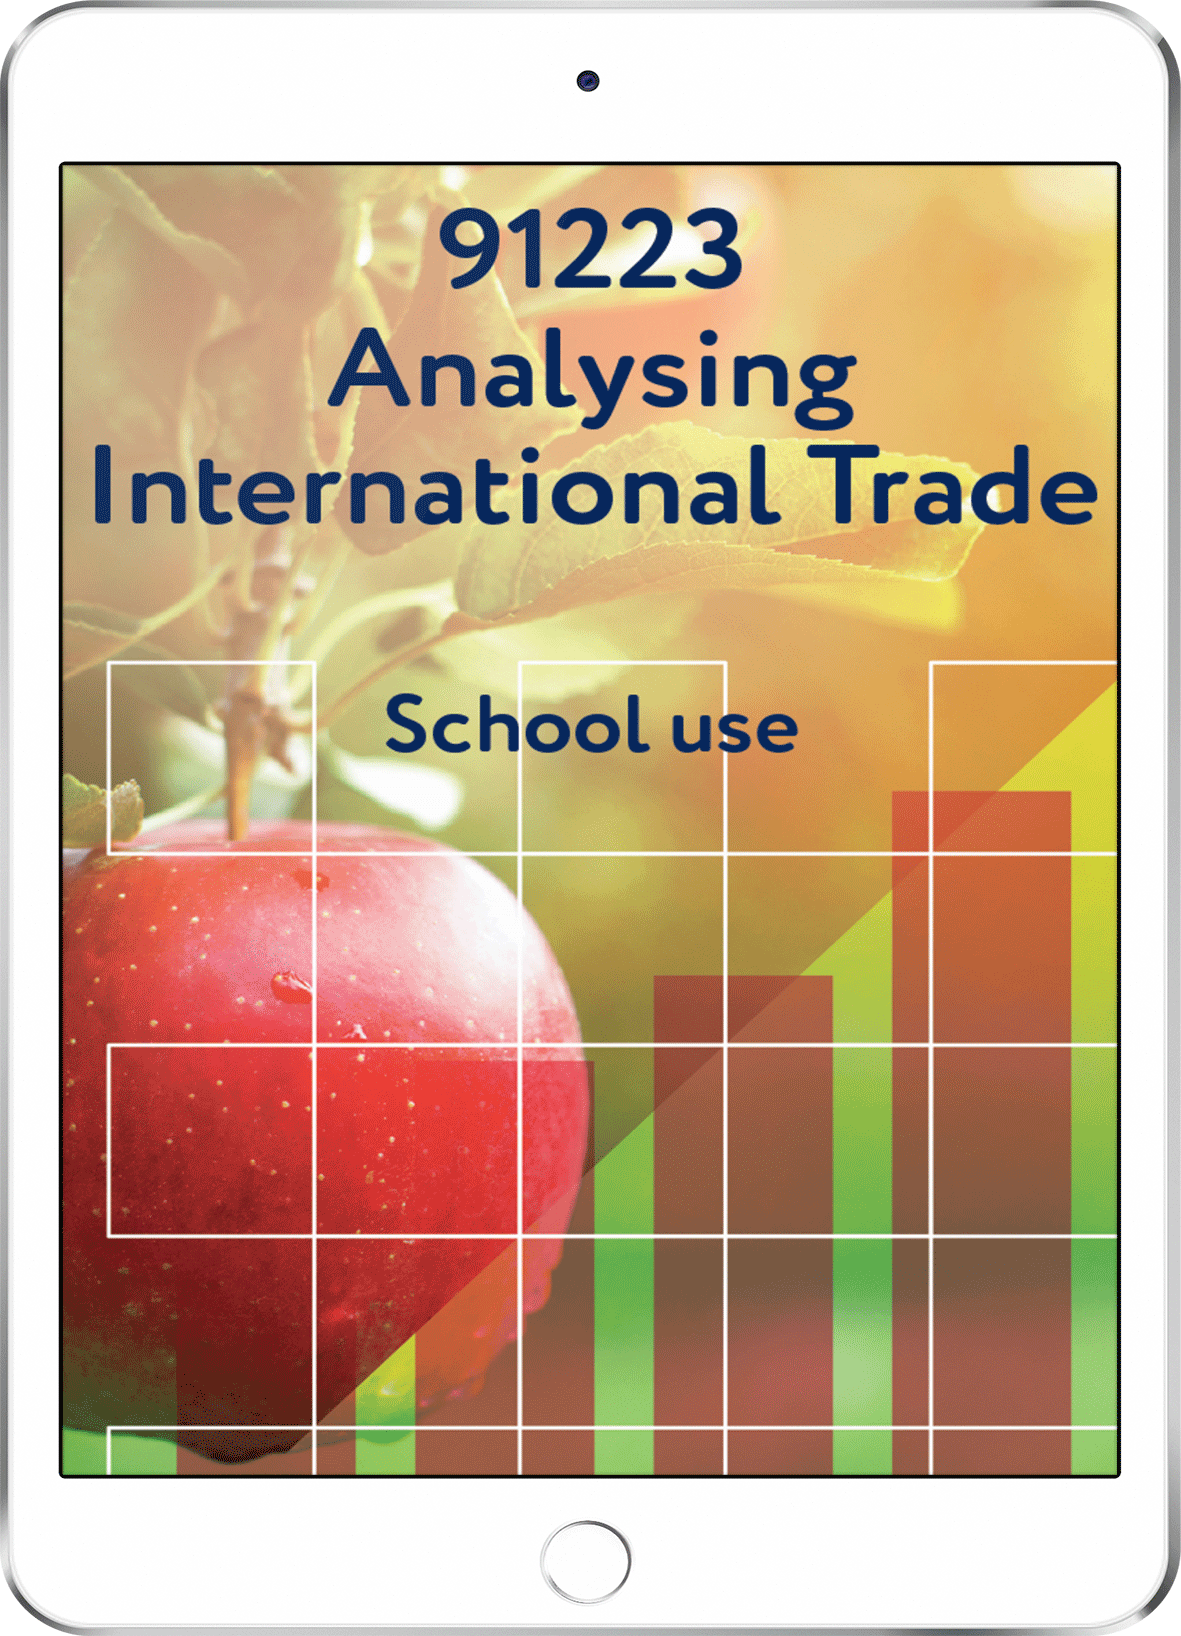 91223 Analysing International Trade - School Use